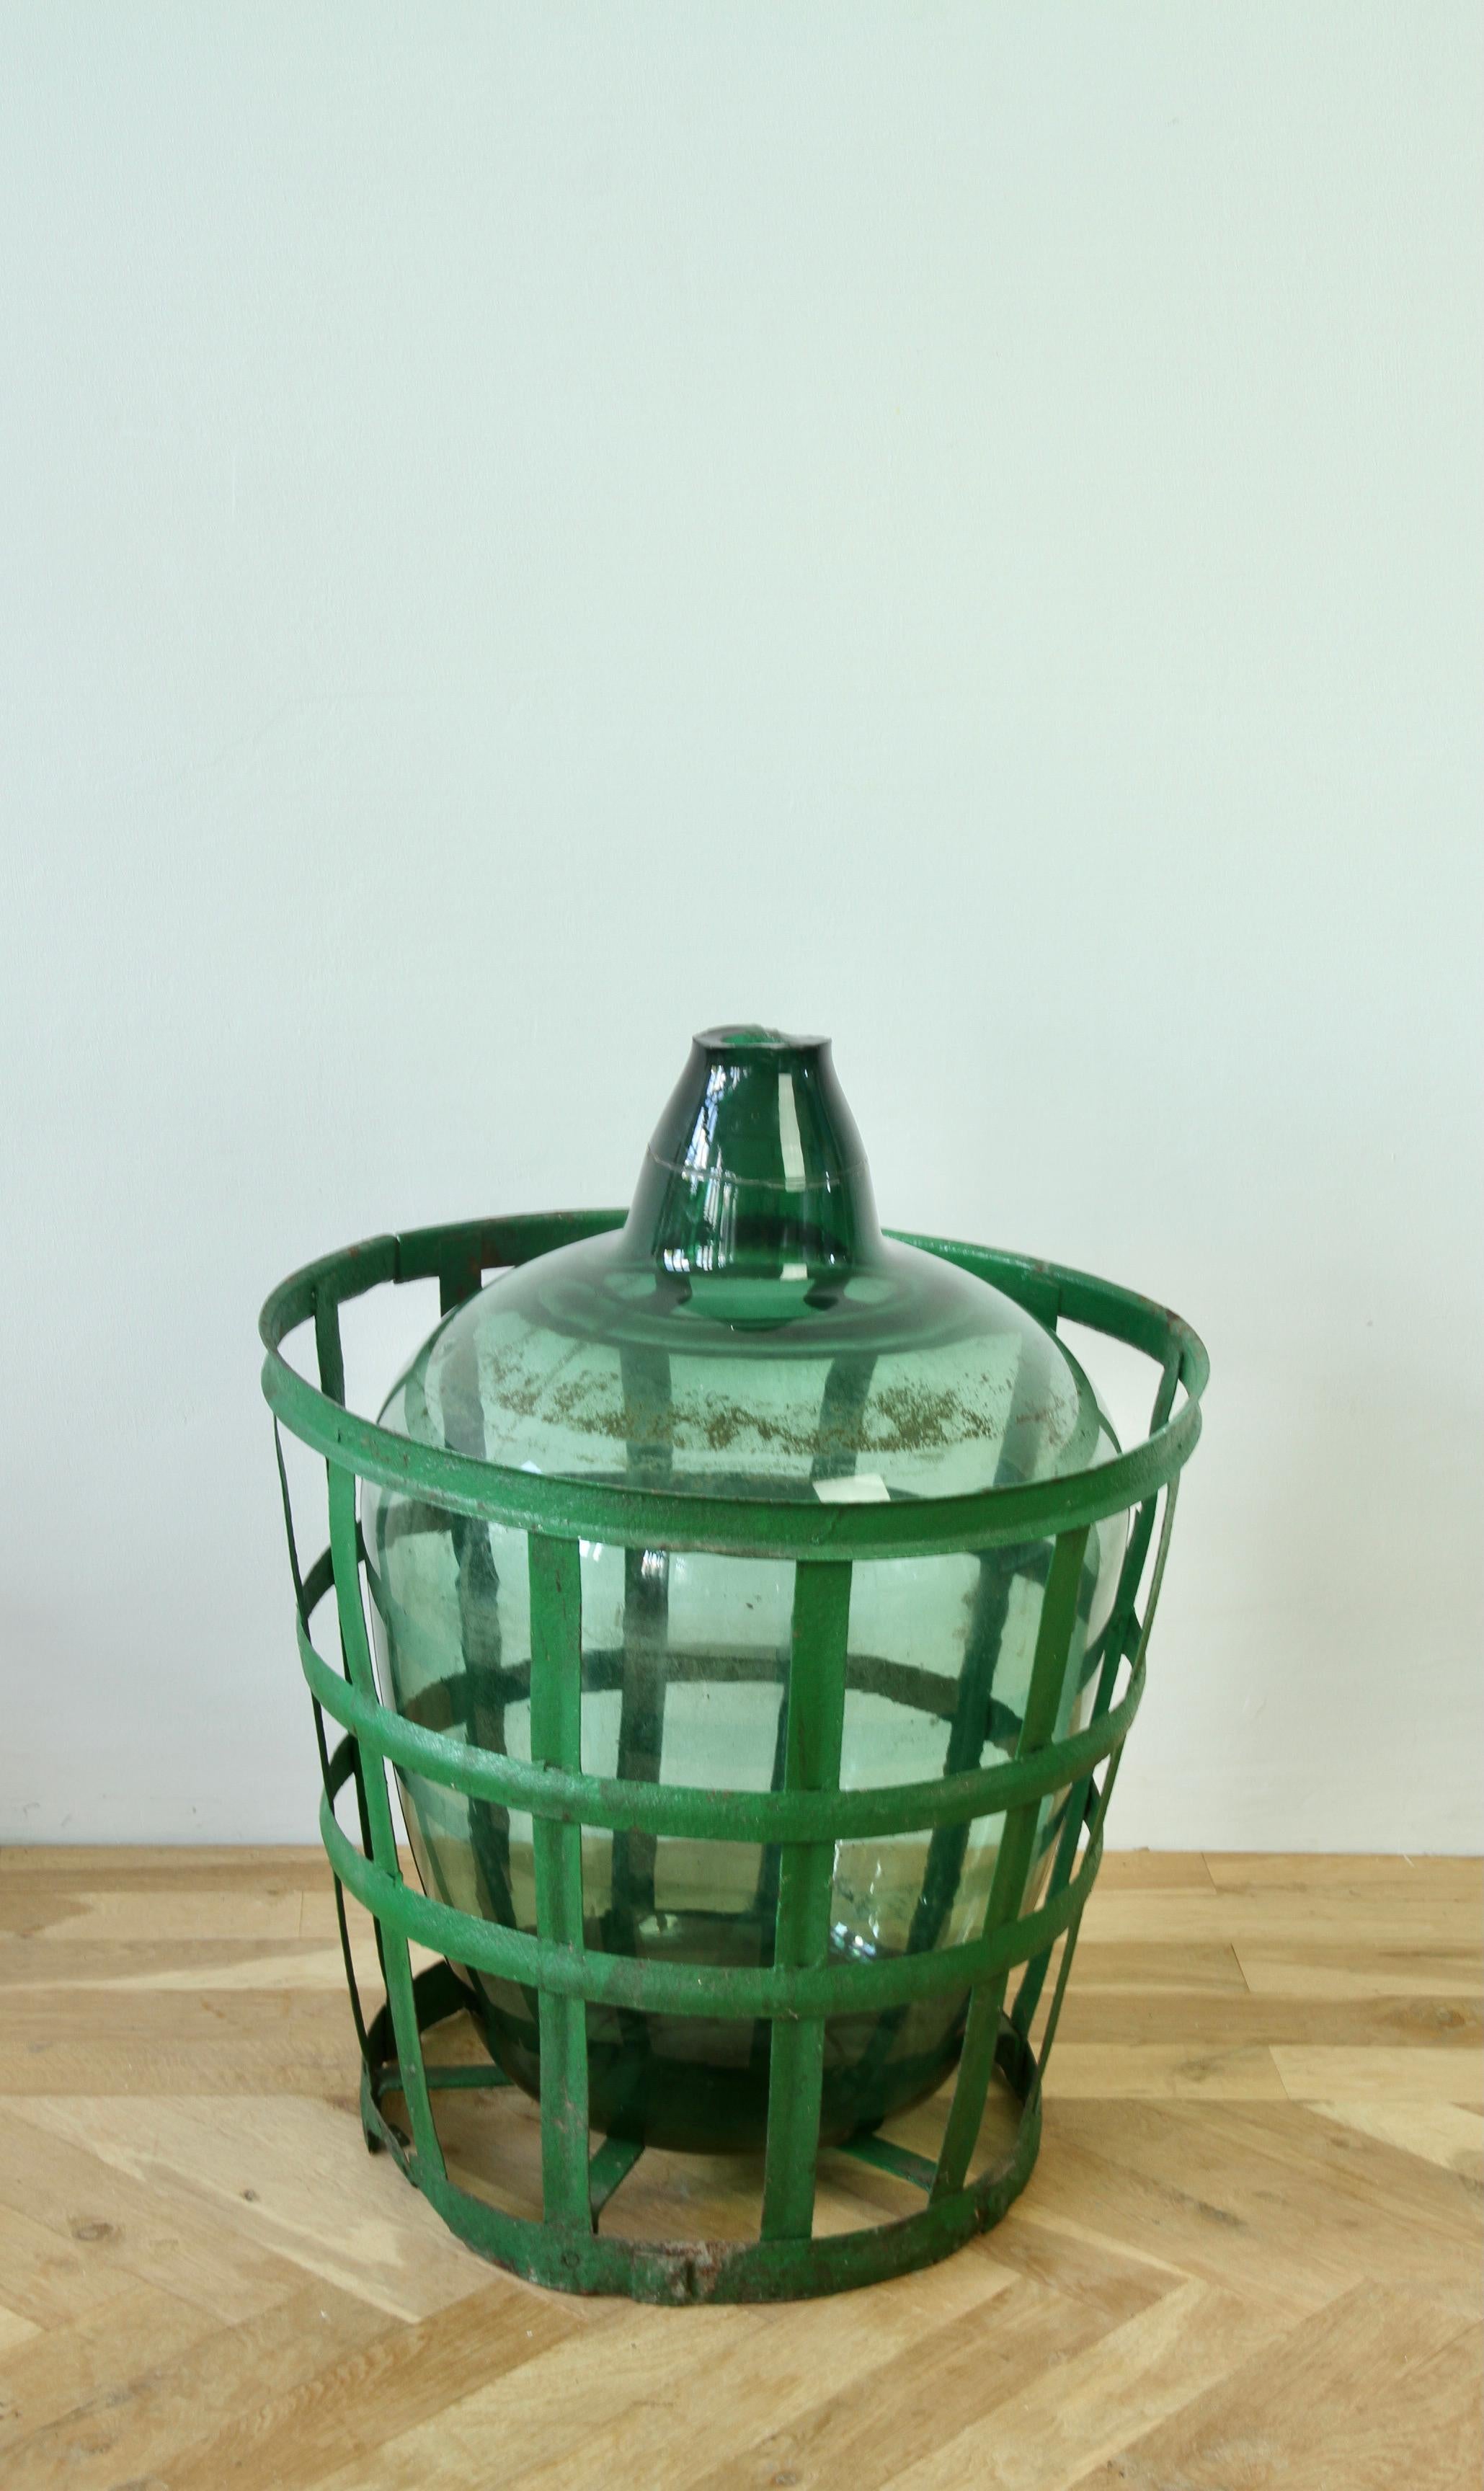 Large Green Glass Hungarian Demijohn, Amphora or Vase with Original Iron Basket For Sale 3